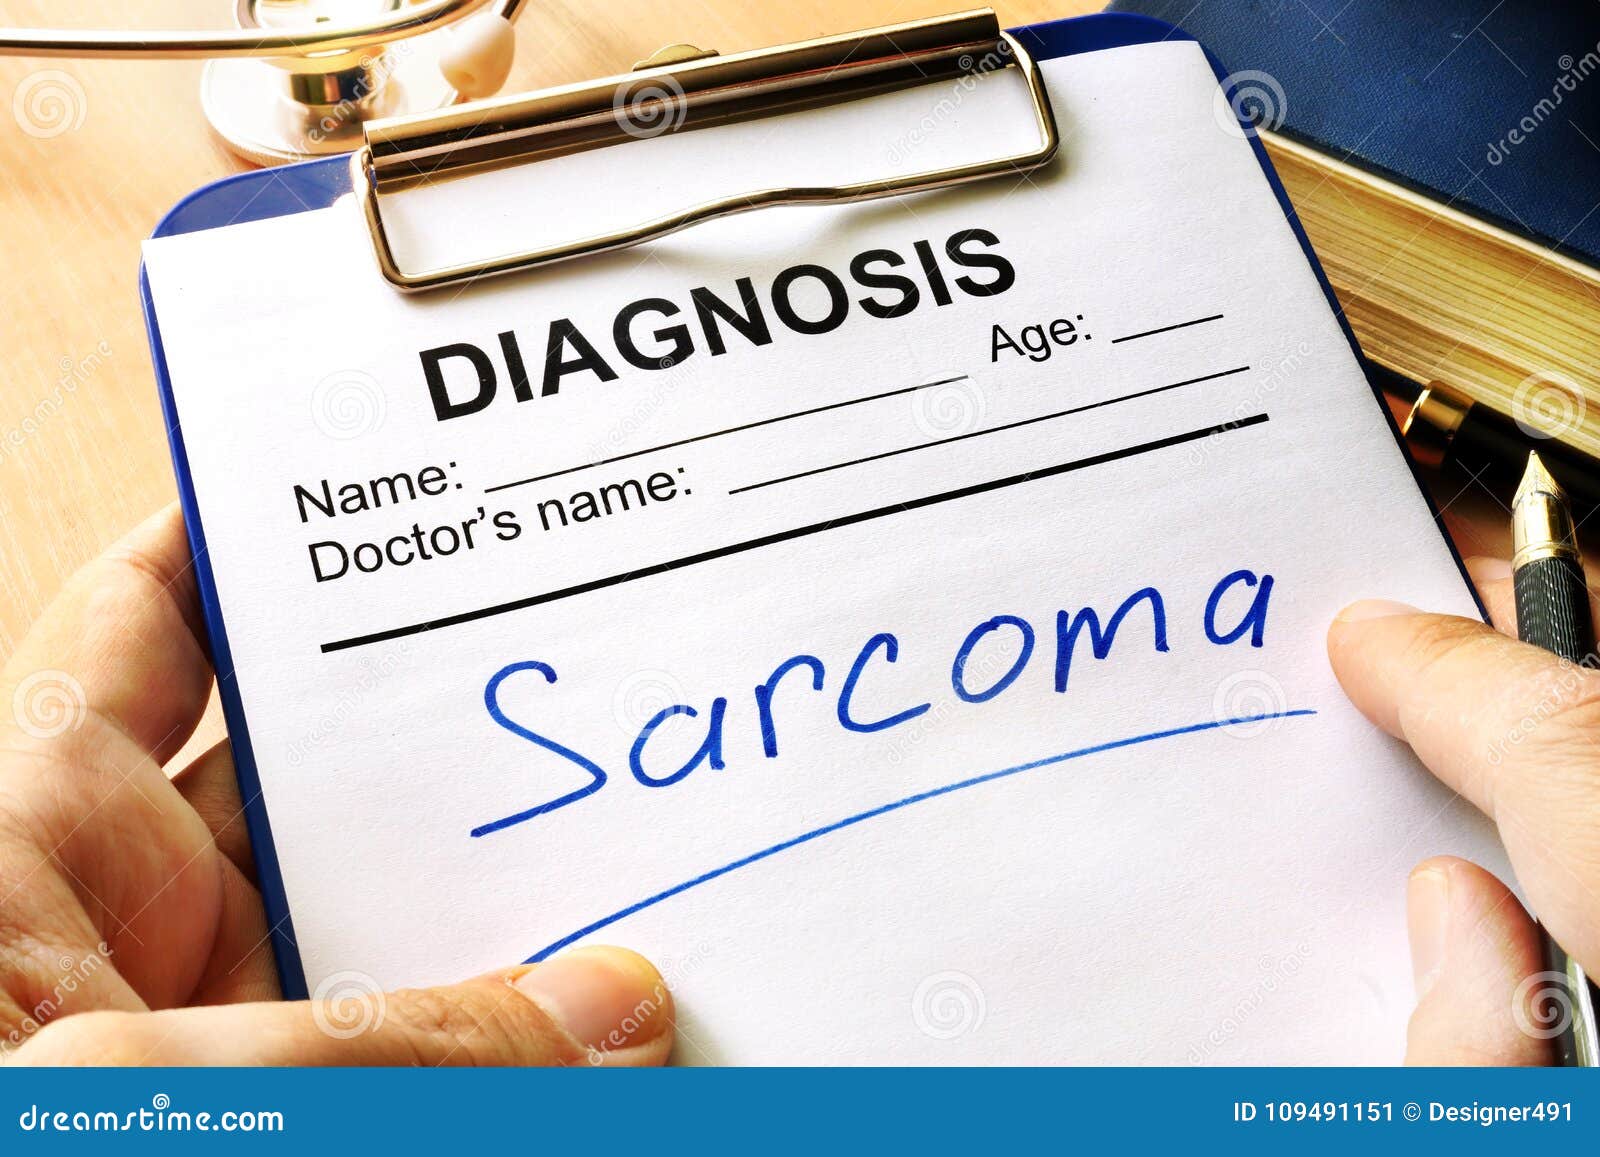 diagnosis sarcoma in medical form.